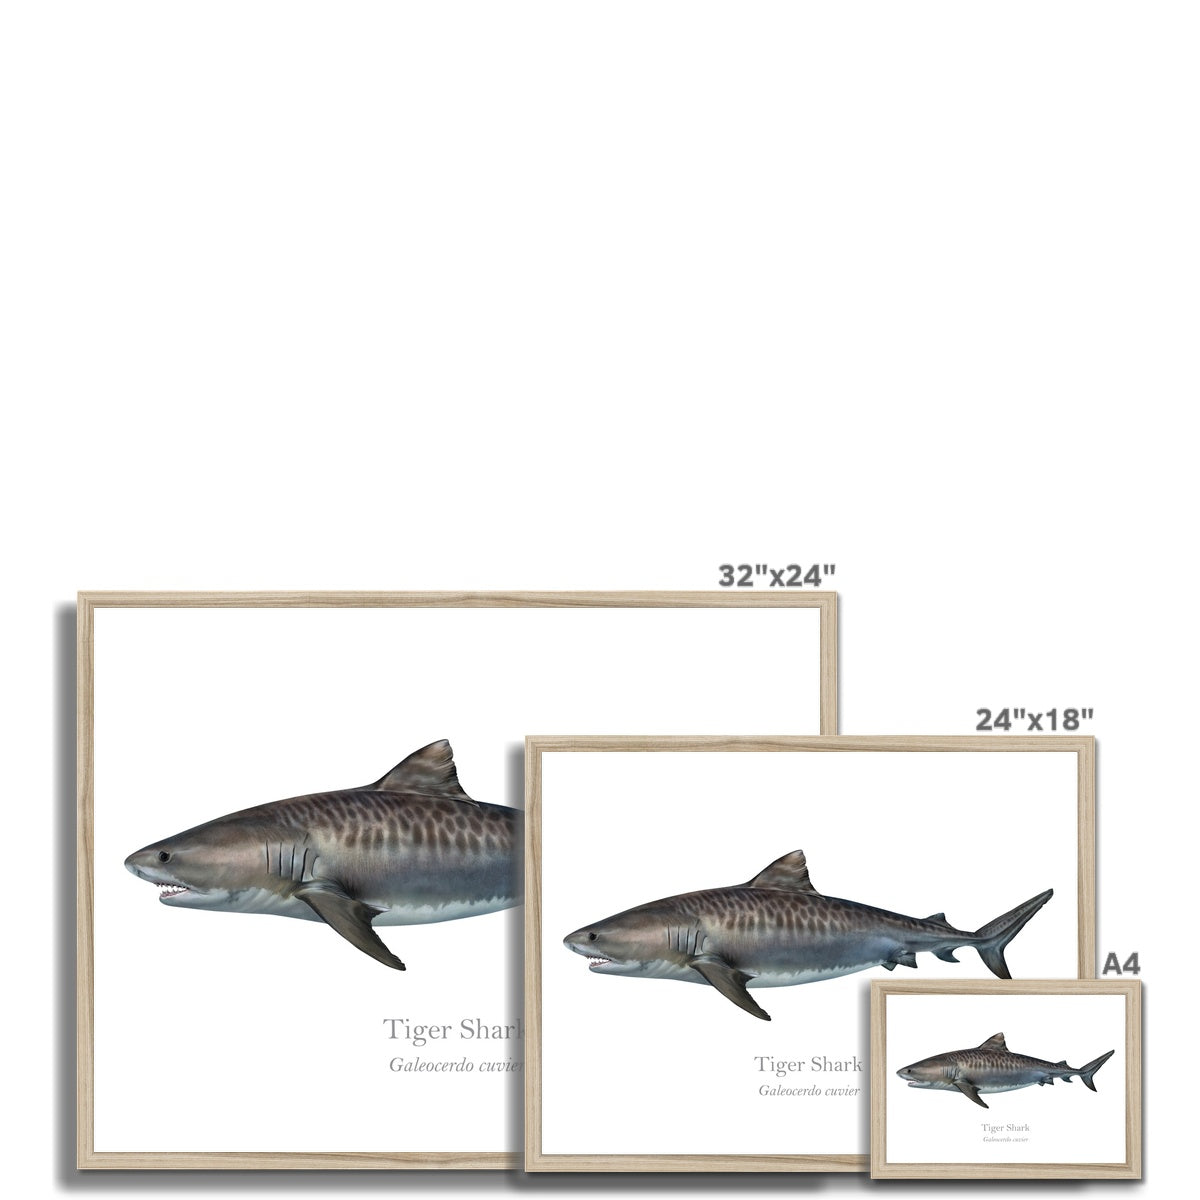 Tiger Shark - Framed Print - With Scientific Name